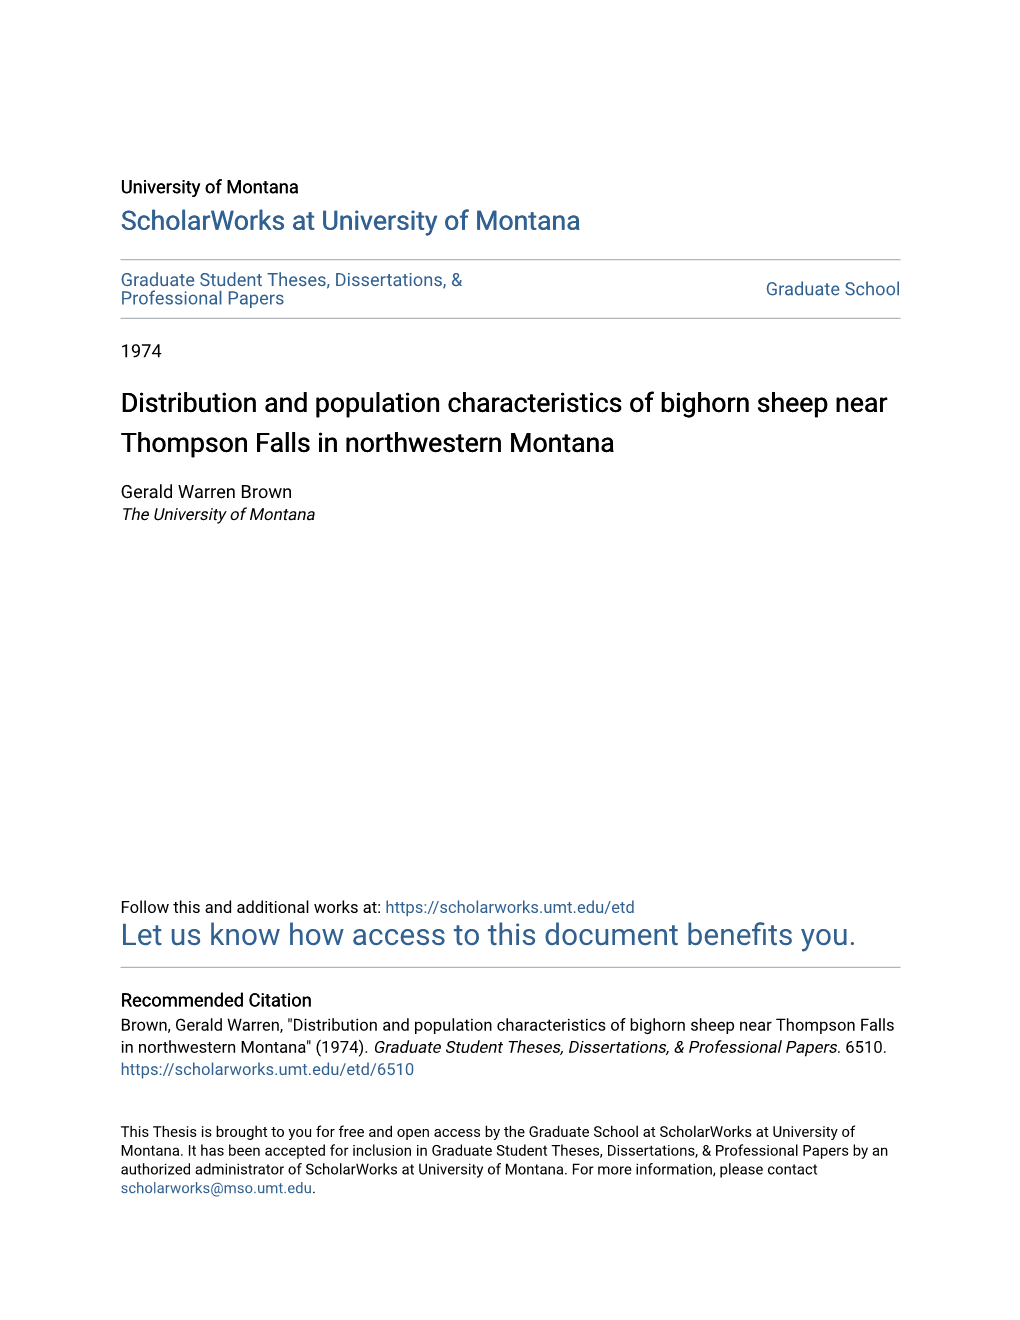 Distribution and Population Characteristics of Bighorn Sheep Near Thompson Falls in Northwestern Montana